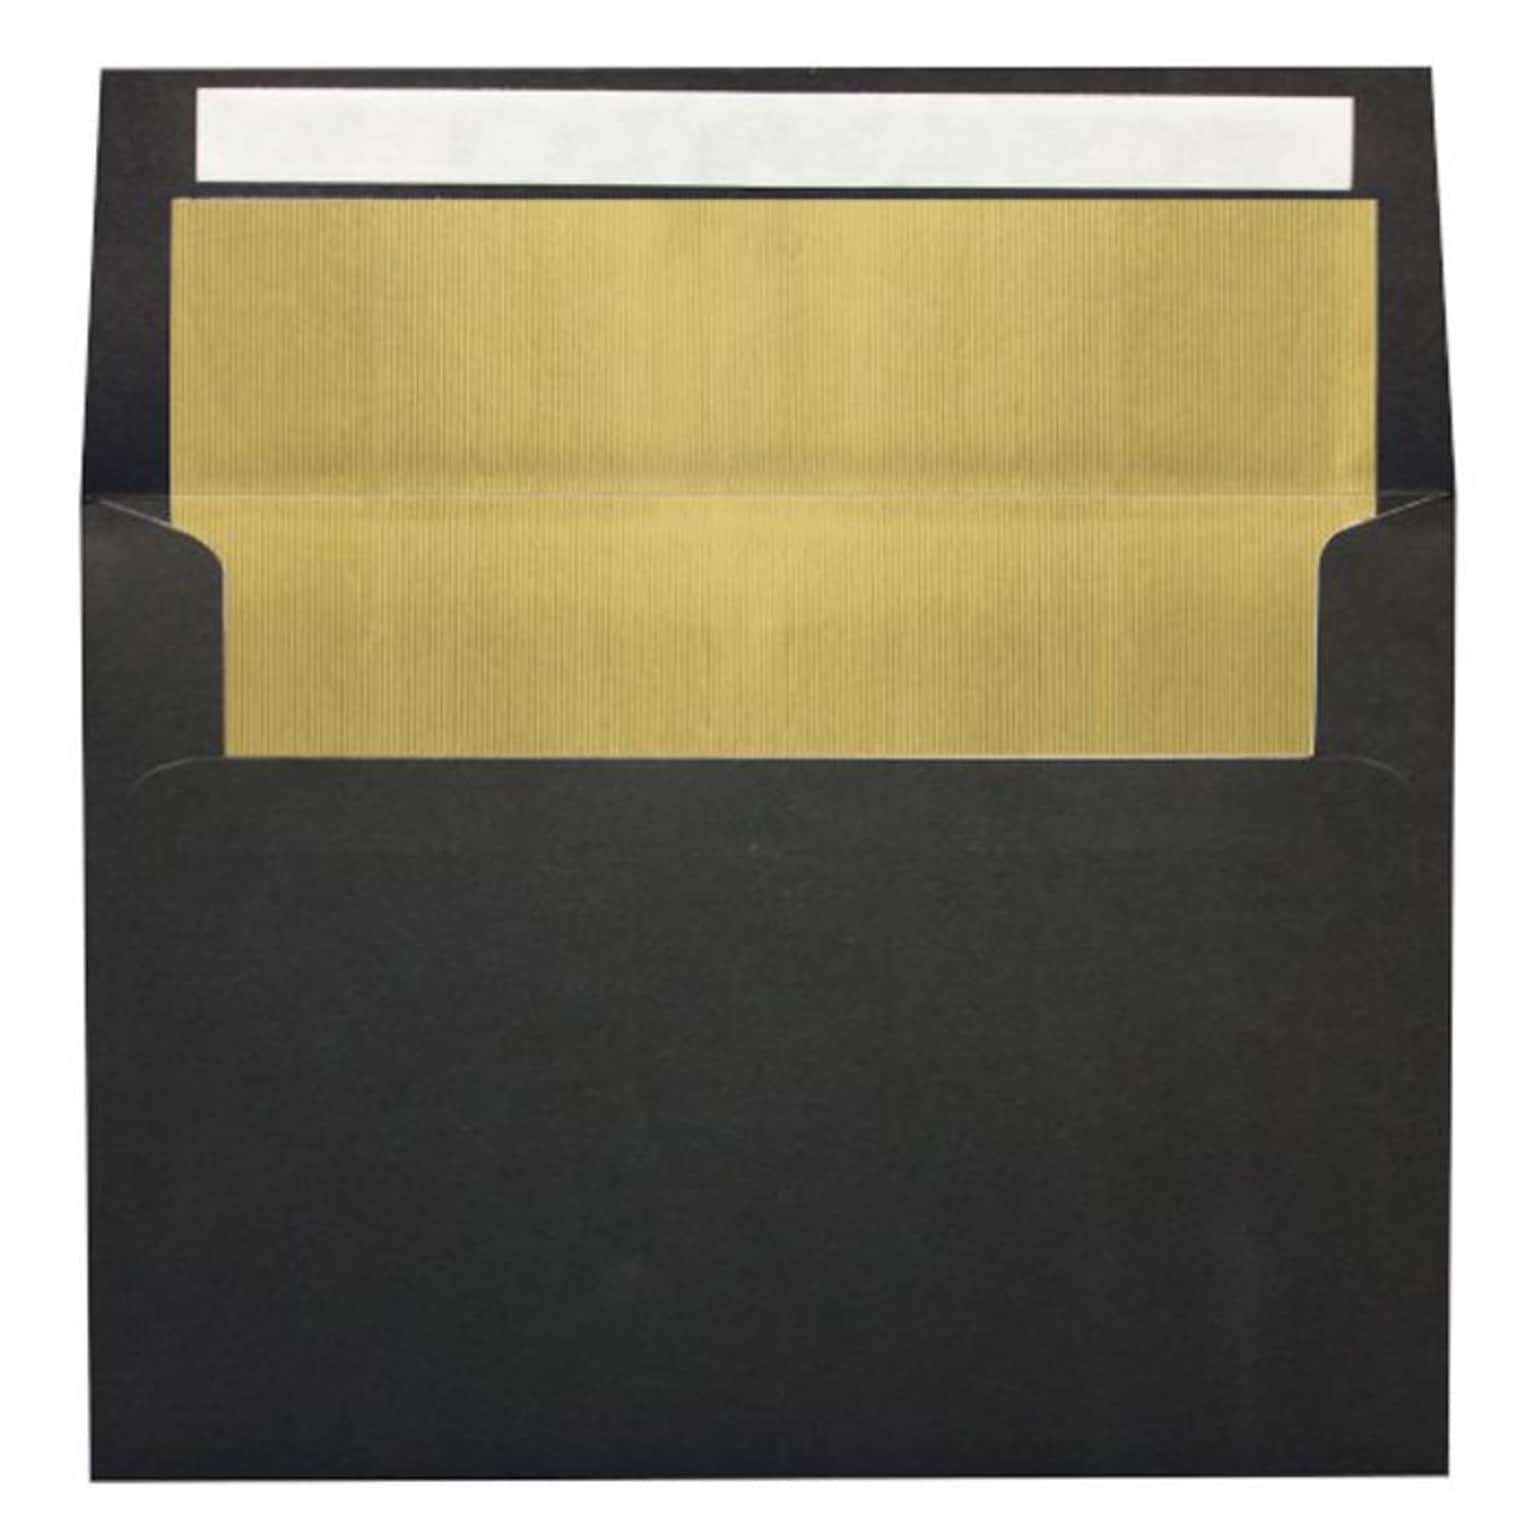 LUX A7 Foil Lined Invitation Envelopes (5 1/4 x 7 1/4) 500/Box, Black w/Gold LUX Lining (FLBK4880-04-500)